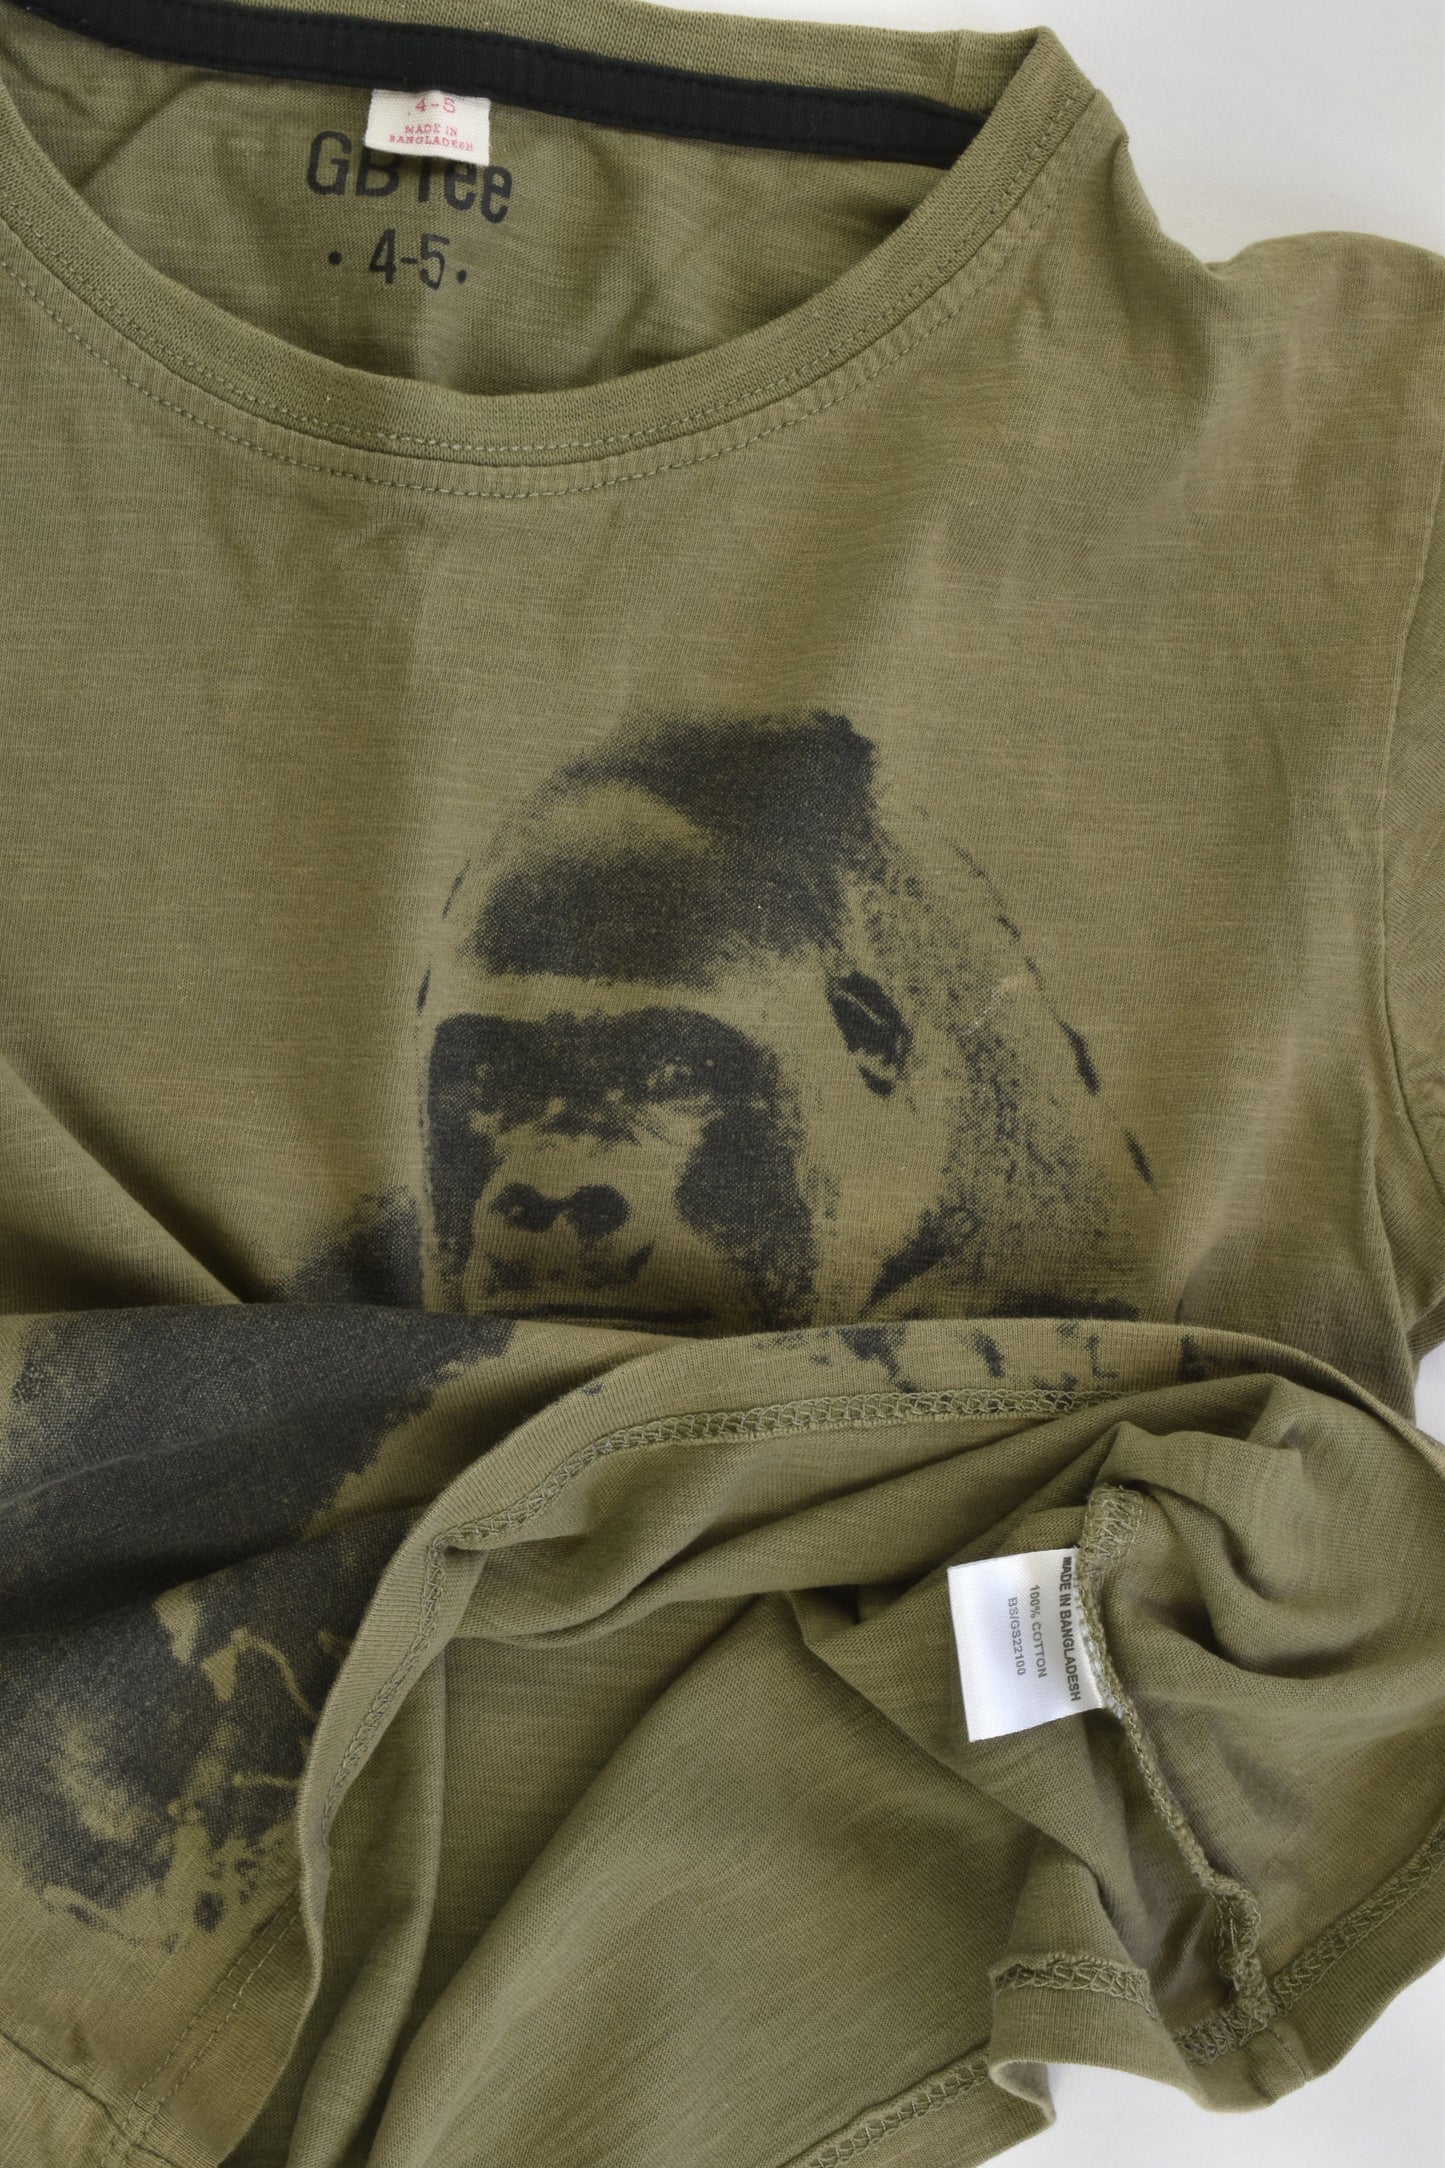 GBtee Size 4-5 Gorilla T-shirt